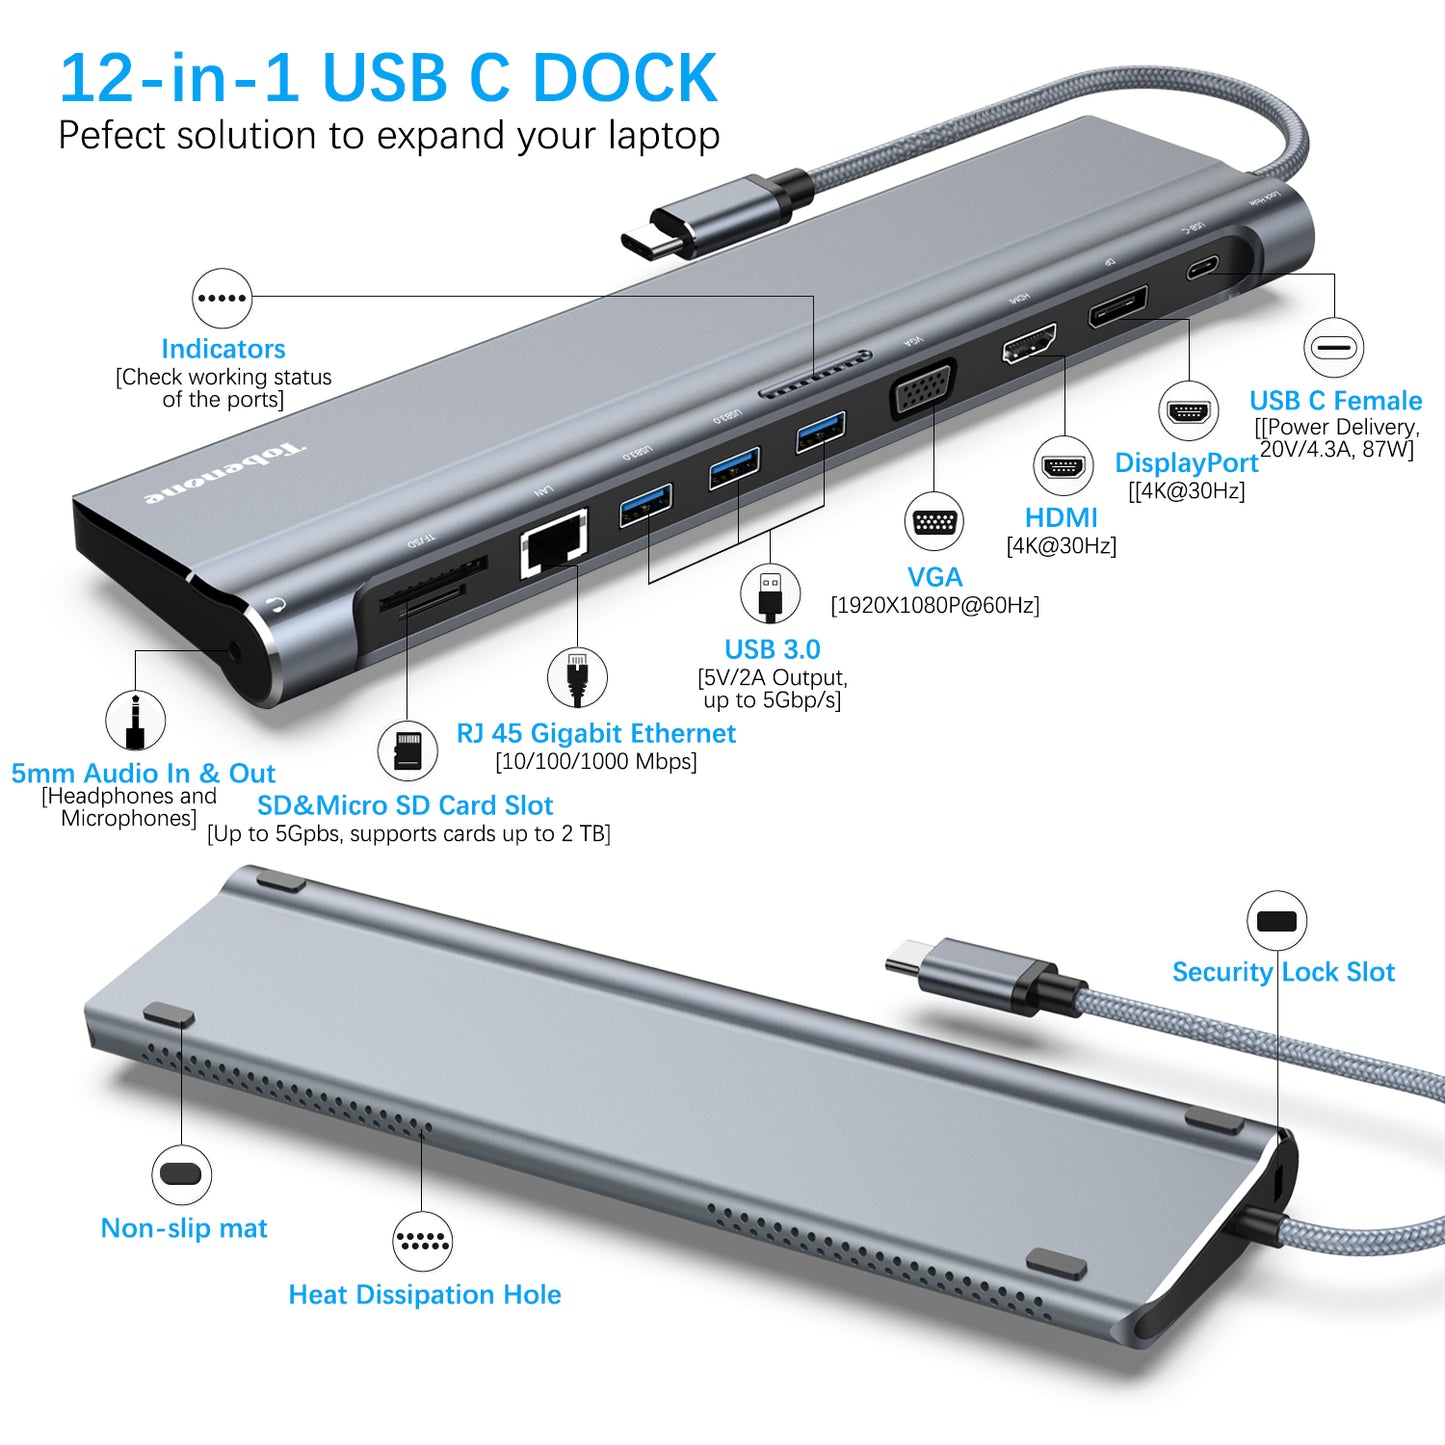 12 in 1 USB C dock for windows laptop